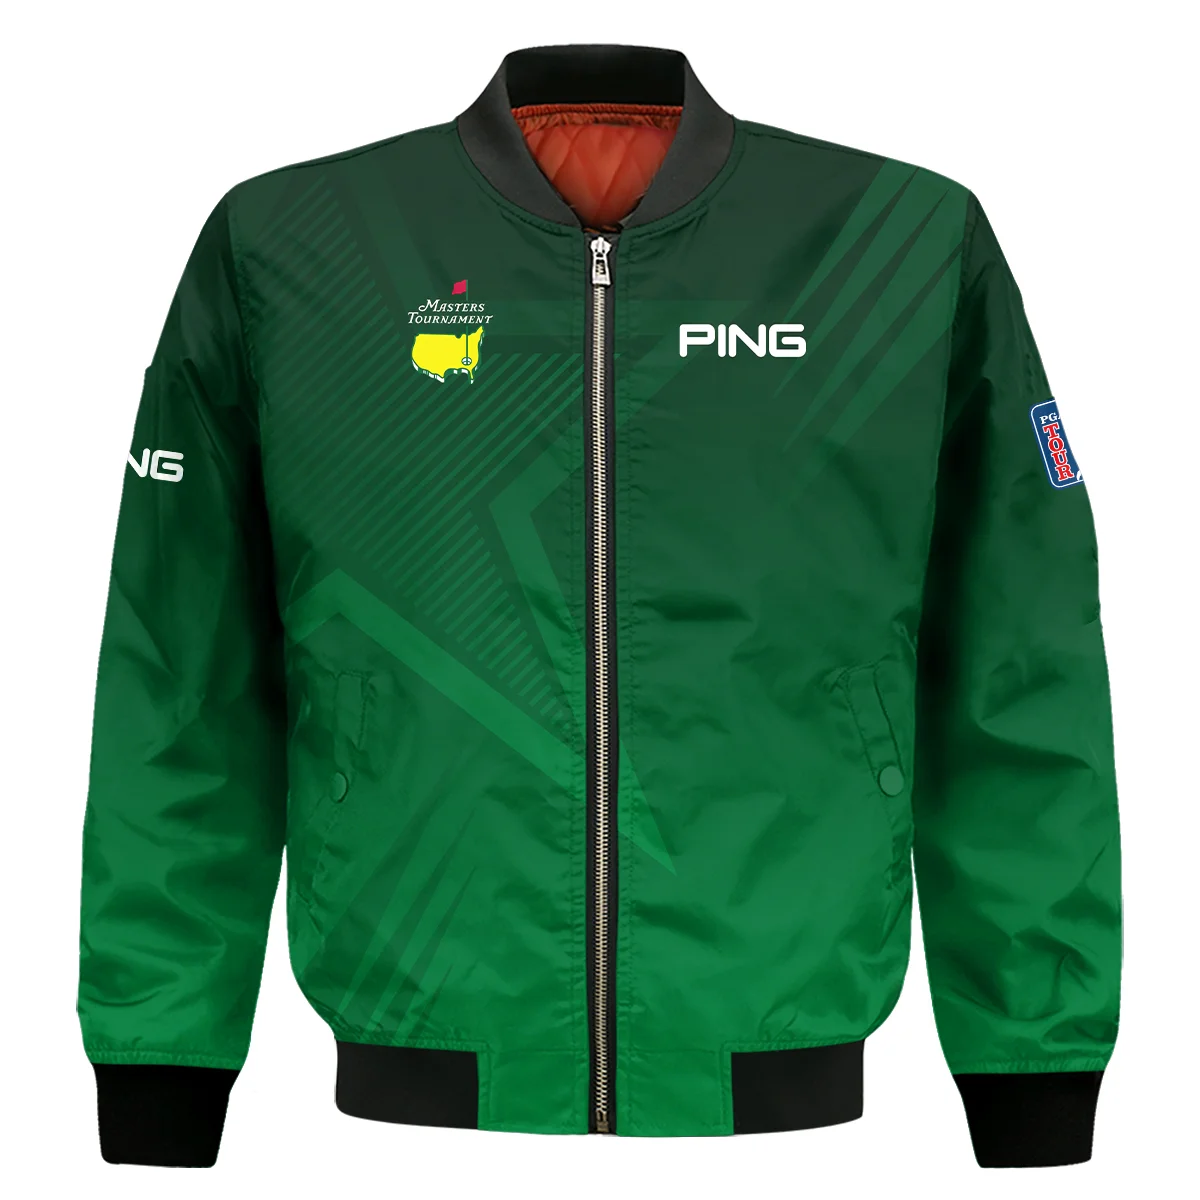 Ping Masters Tournament Bomber Jacket Dark Green Gradient Star Pattern Golf Sports Bomber Jacket